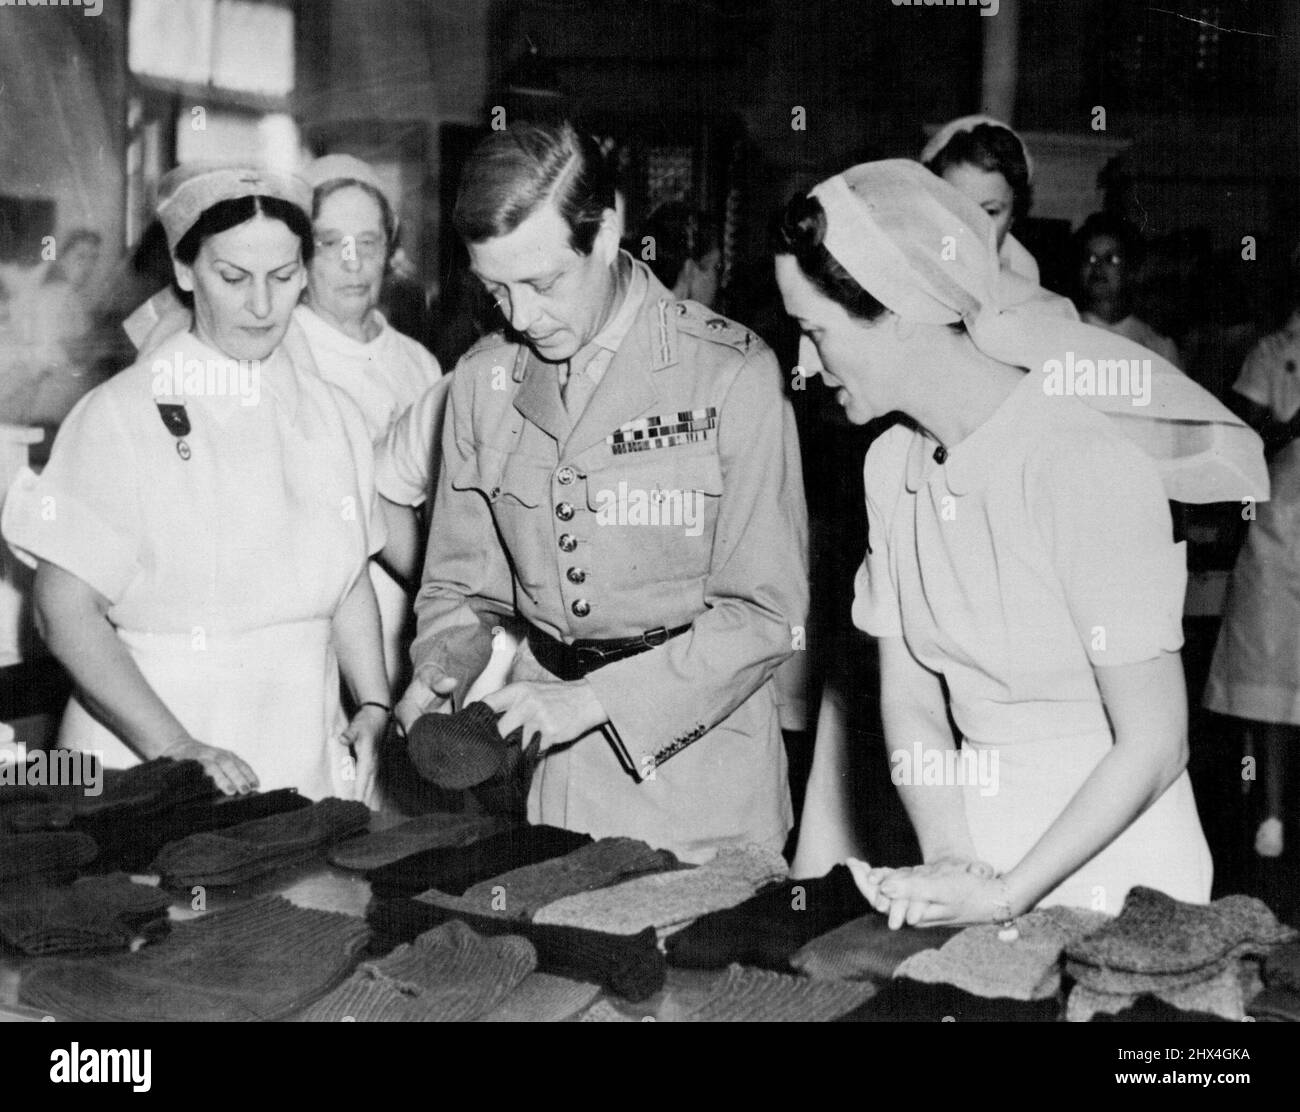 Duke & Duchess Of Windsor Scenes 1942-43-44-45. January 27, 1942. (Photo by Acme Newspictures Inc). Stock Photo